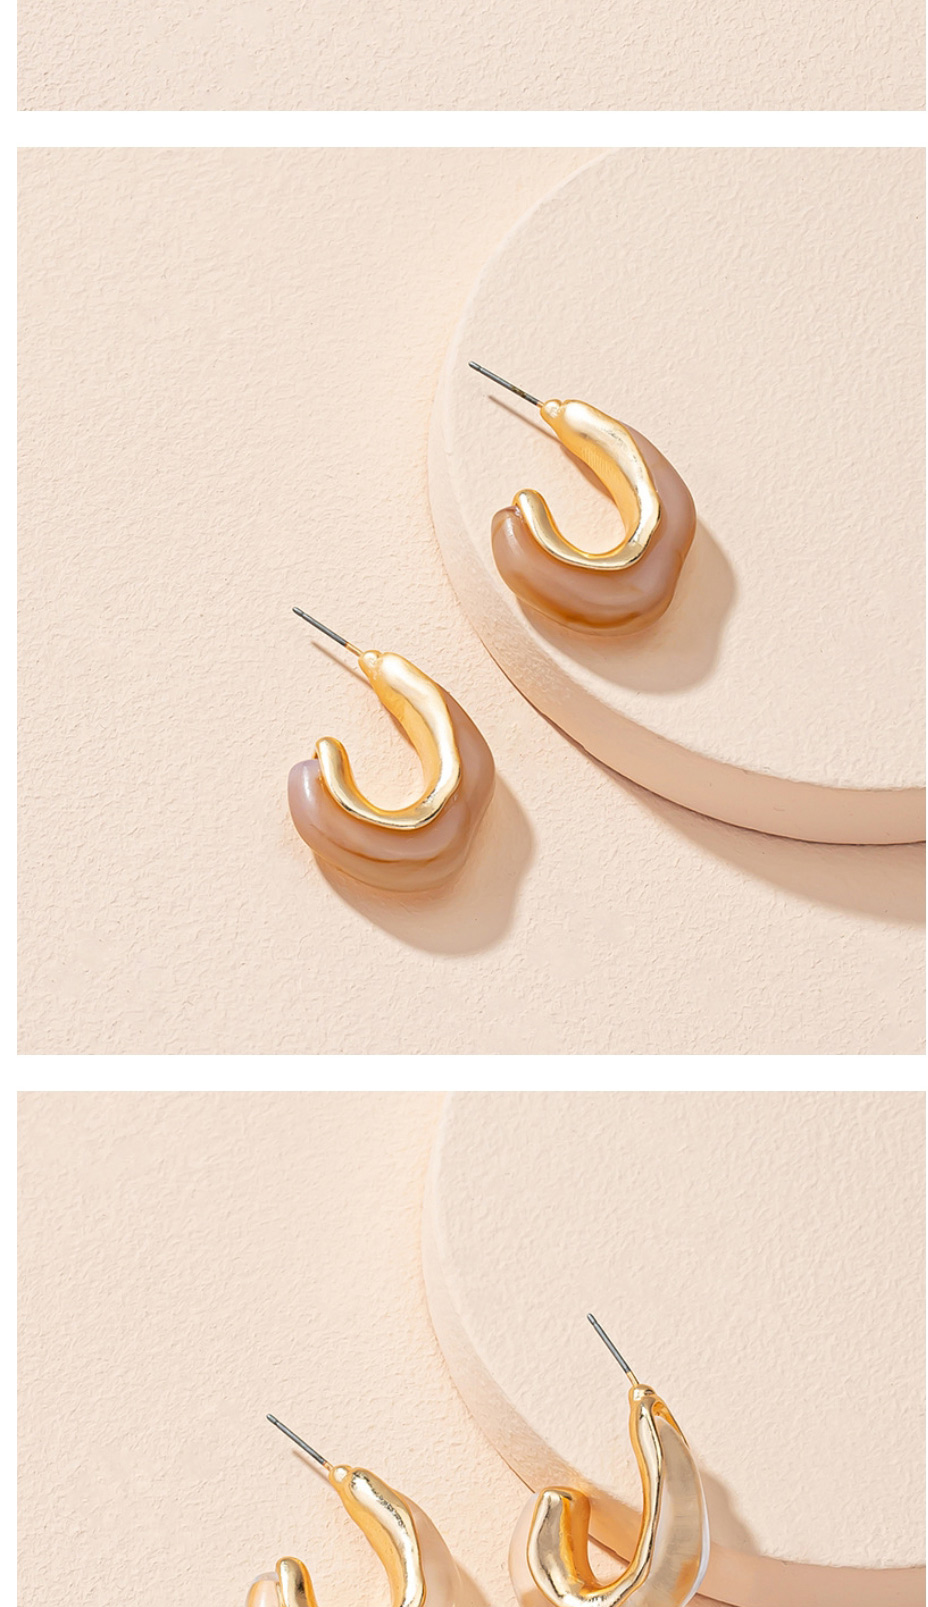 Fashion Amber Acrylic Irregular Geometric Earrings,Hoop Earrings